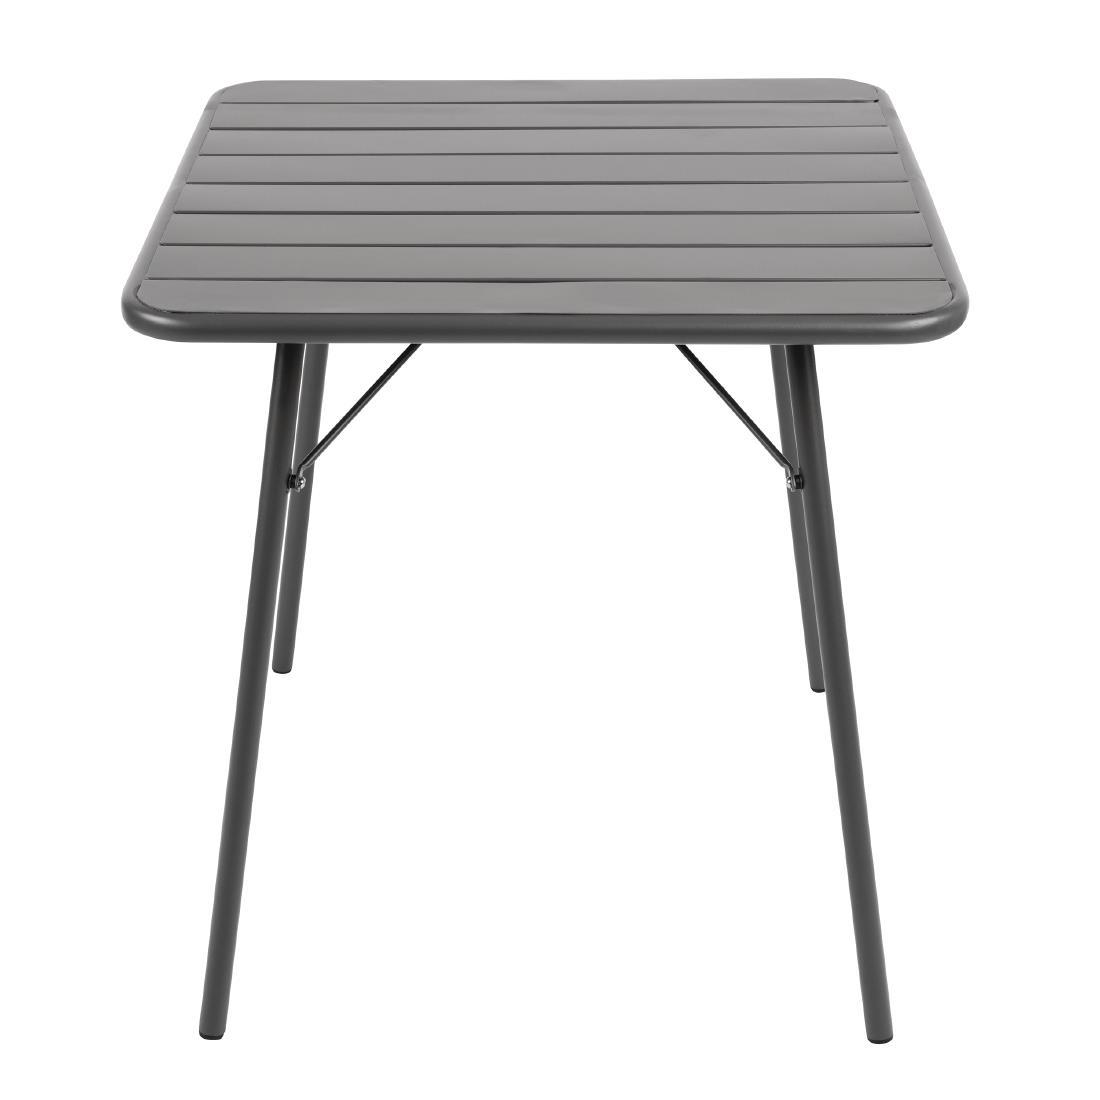 Bolero Square Slatted Steel Table Grey 700mm - CS730  - 2